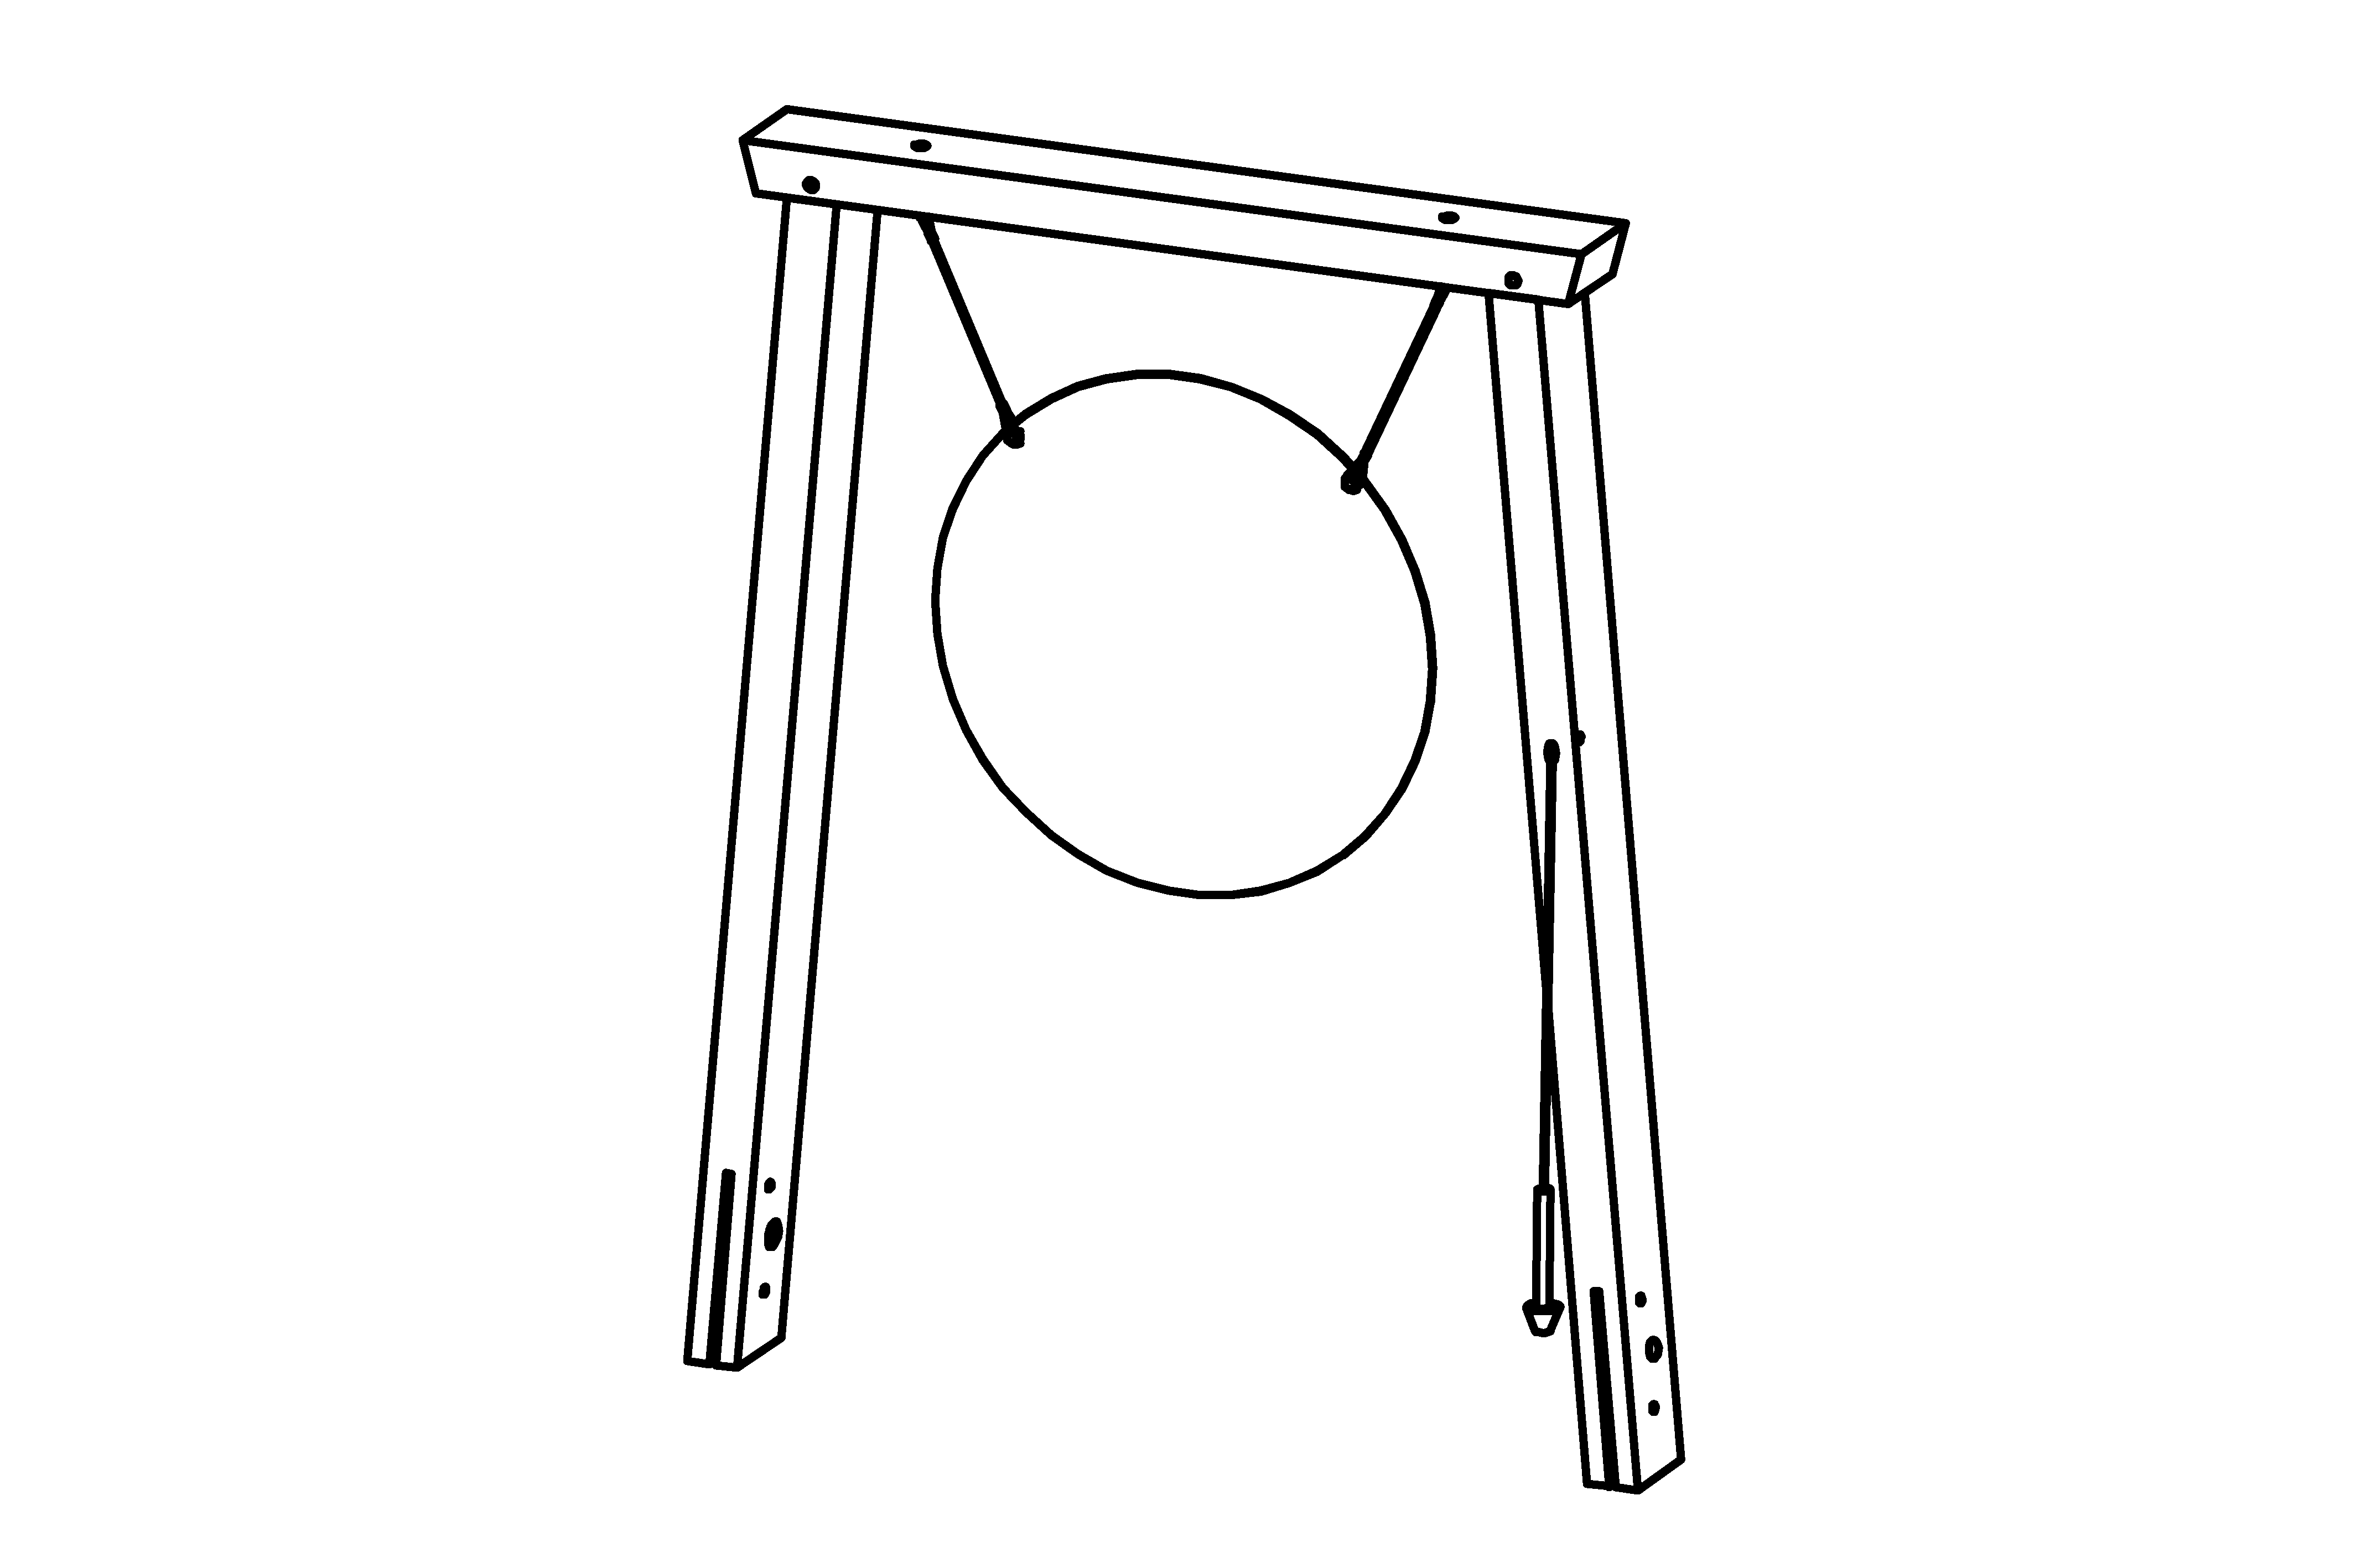 Gong, diameter = 80 cm